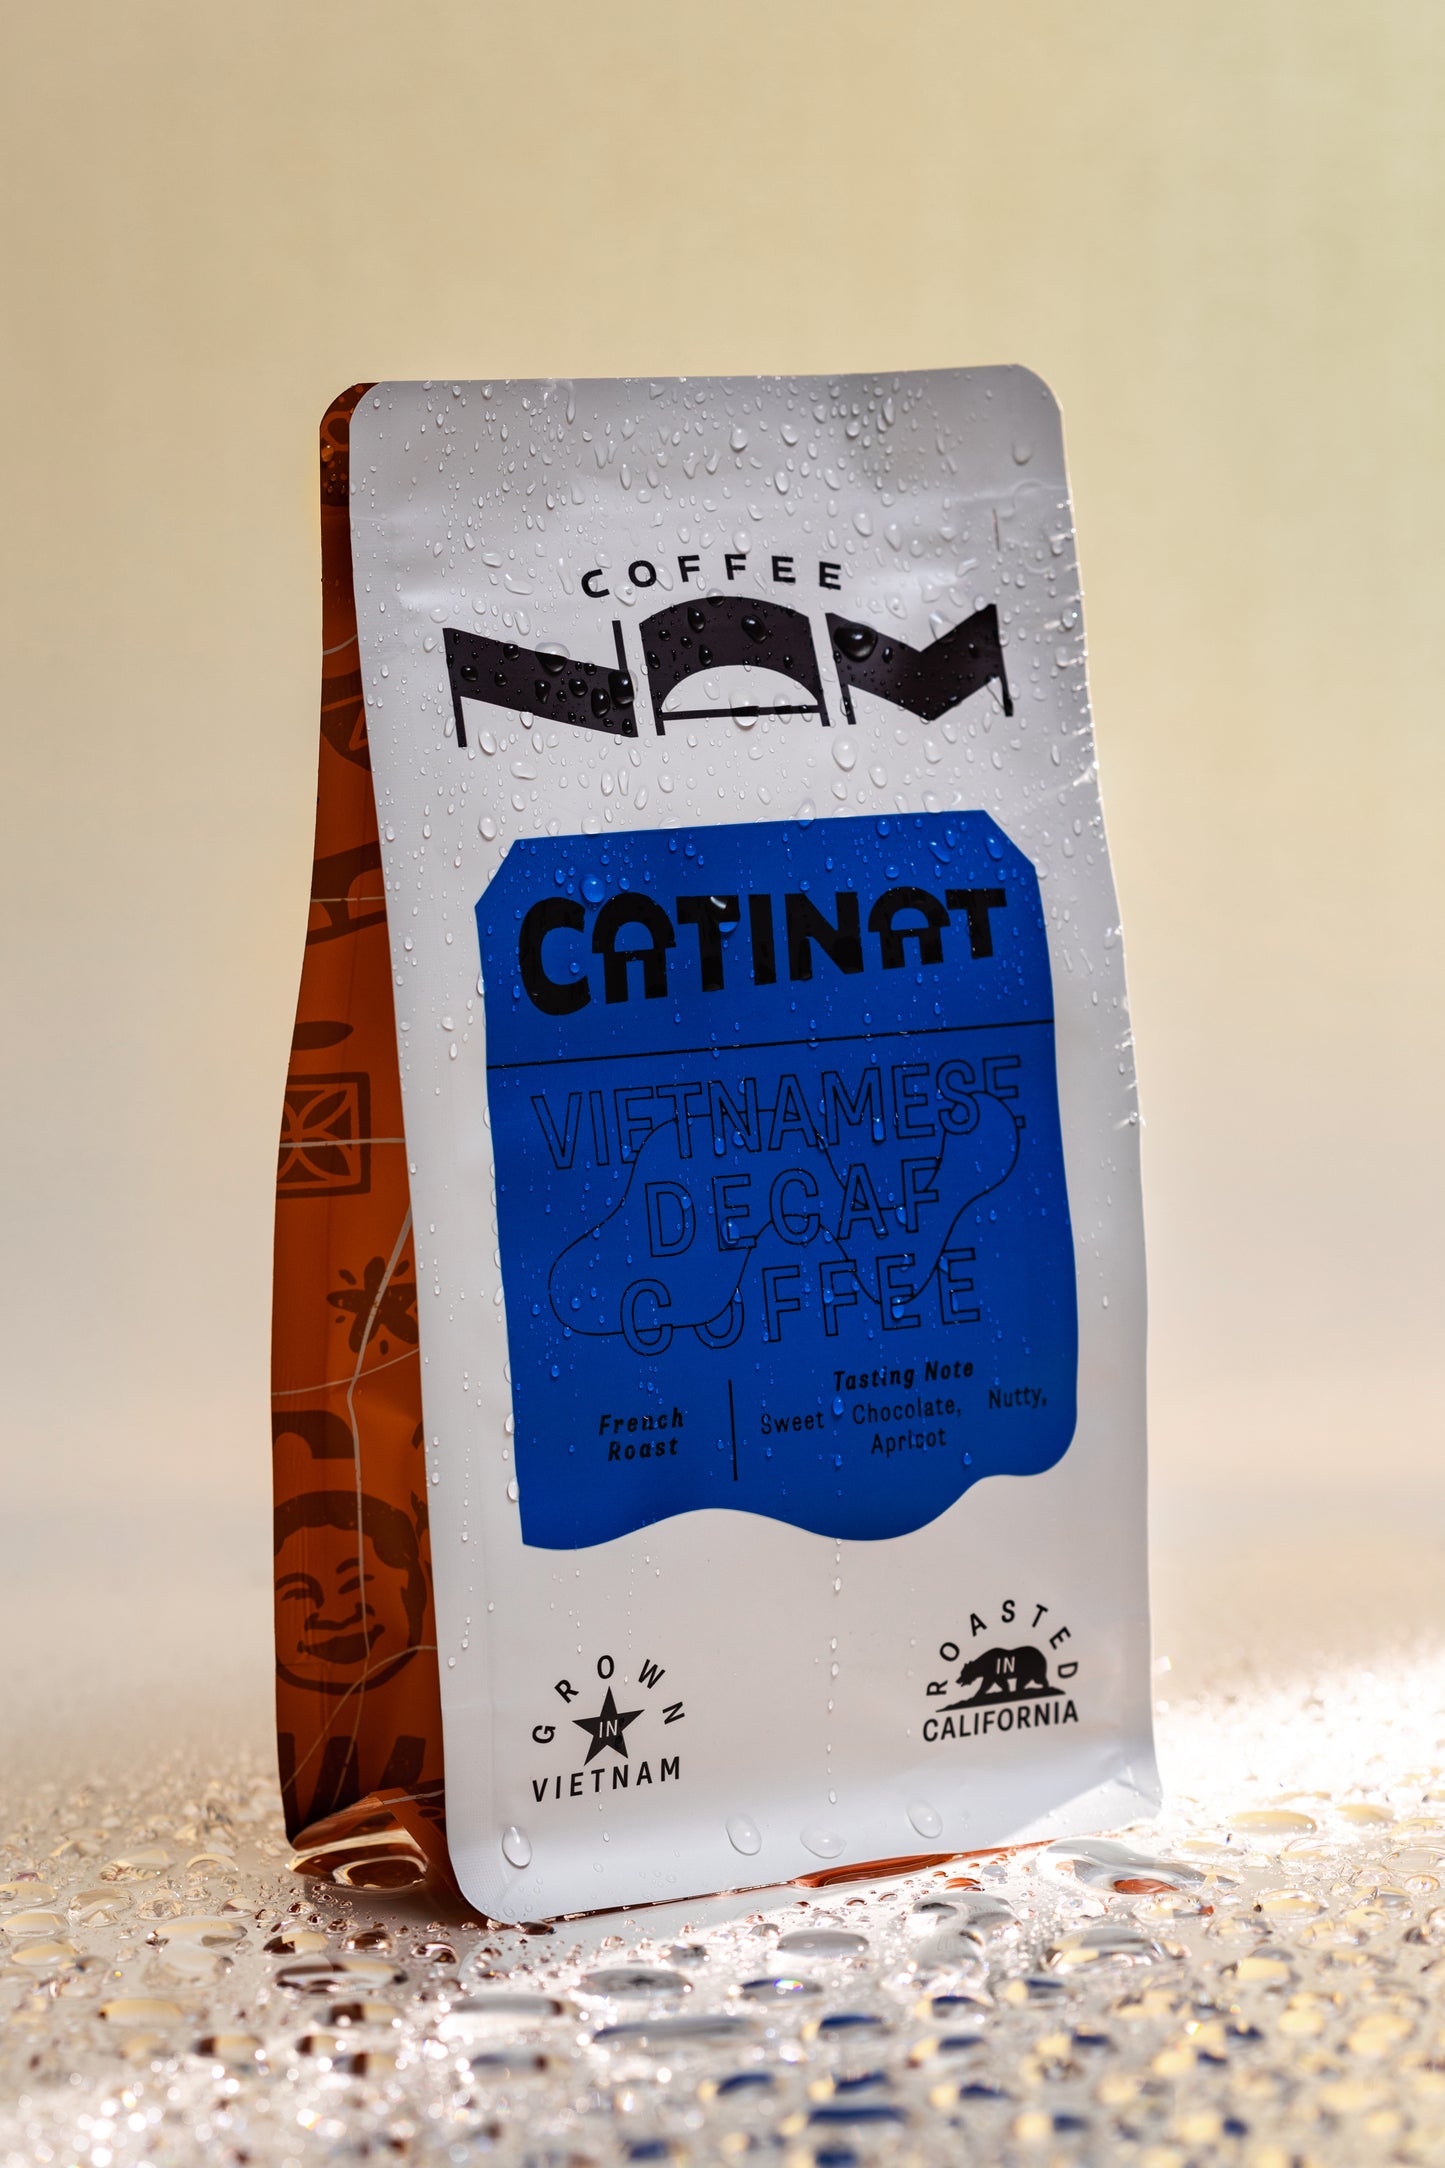 Catinat (Decaf Coffee)